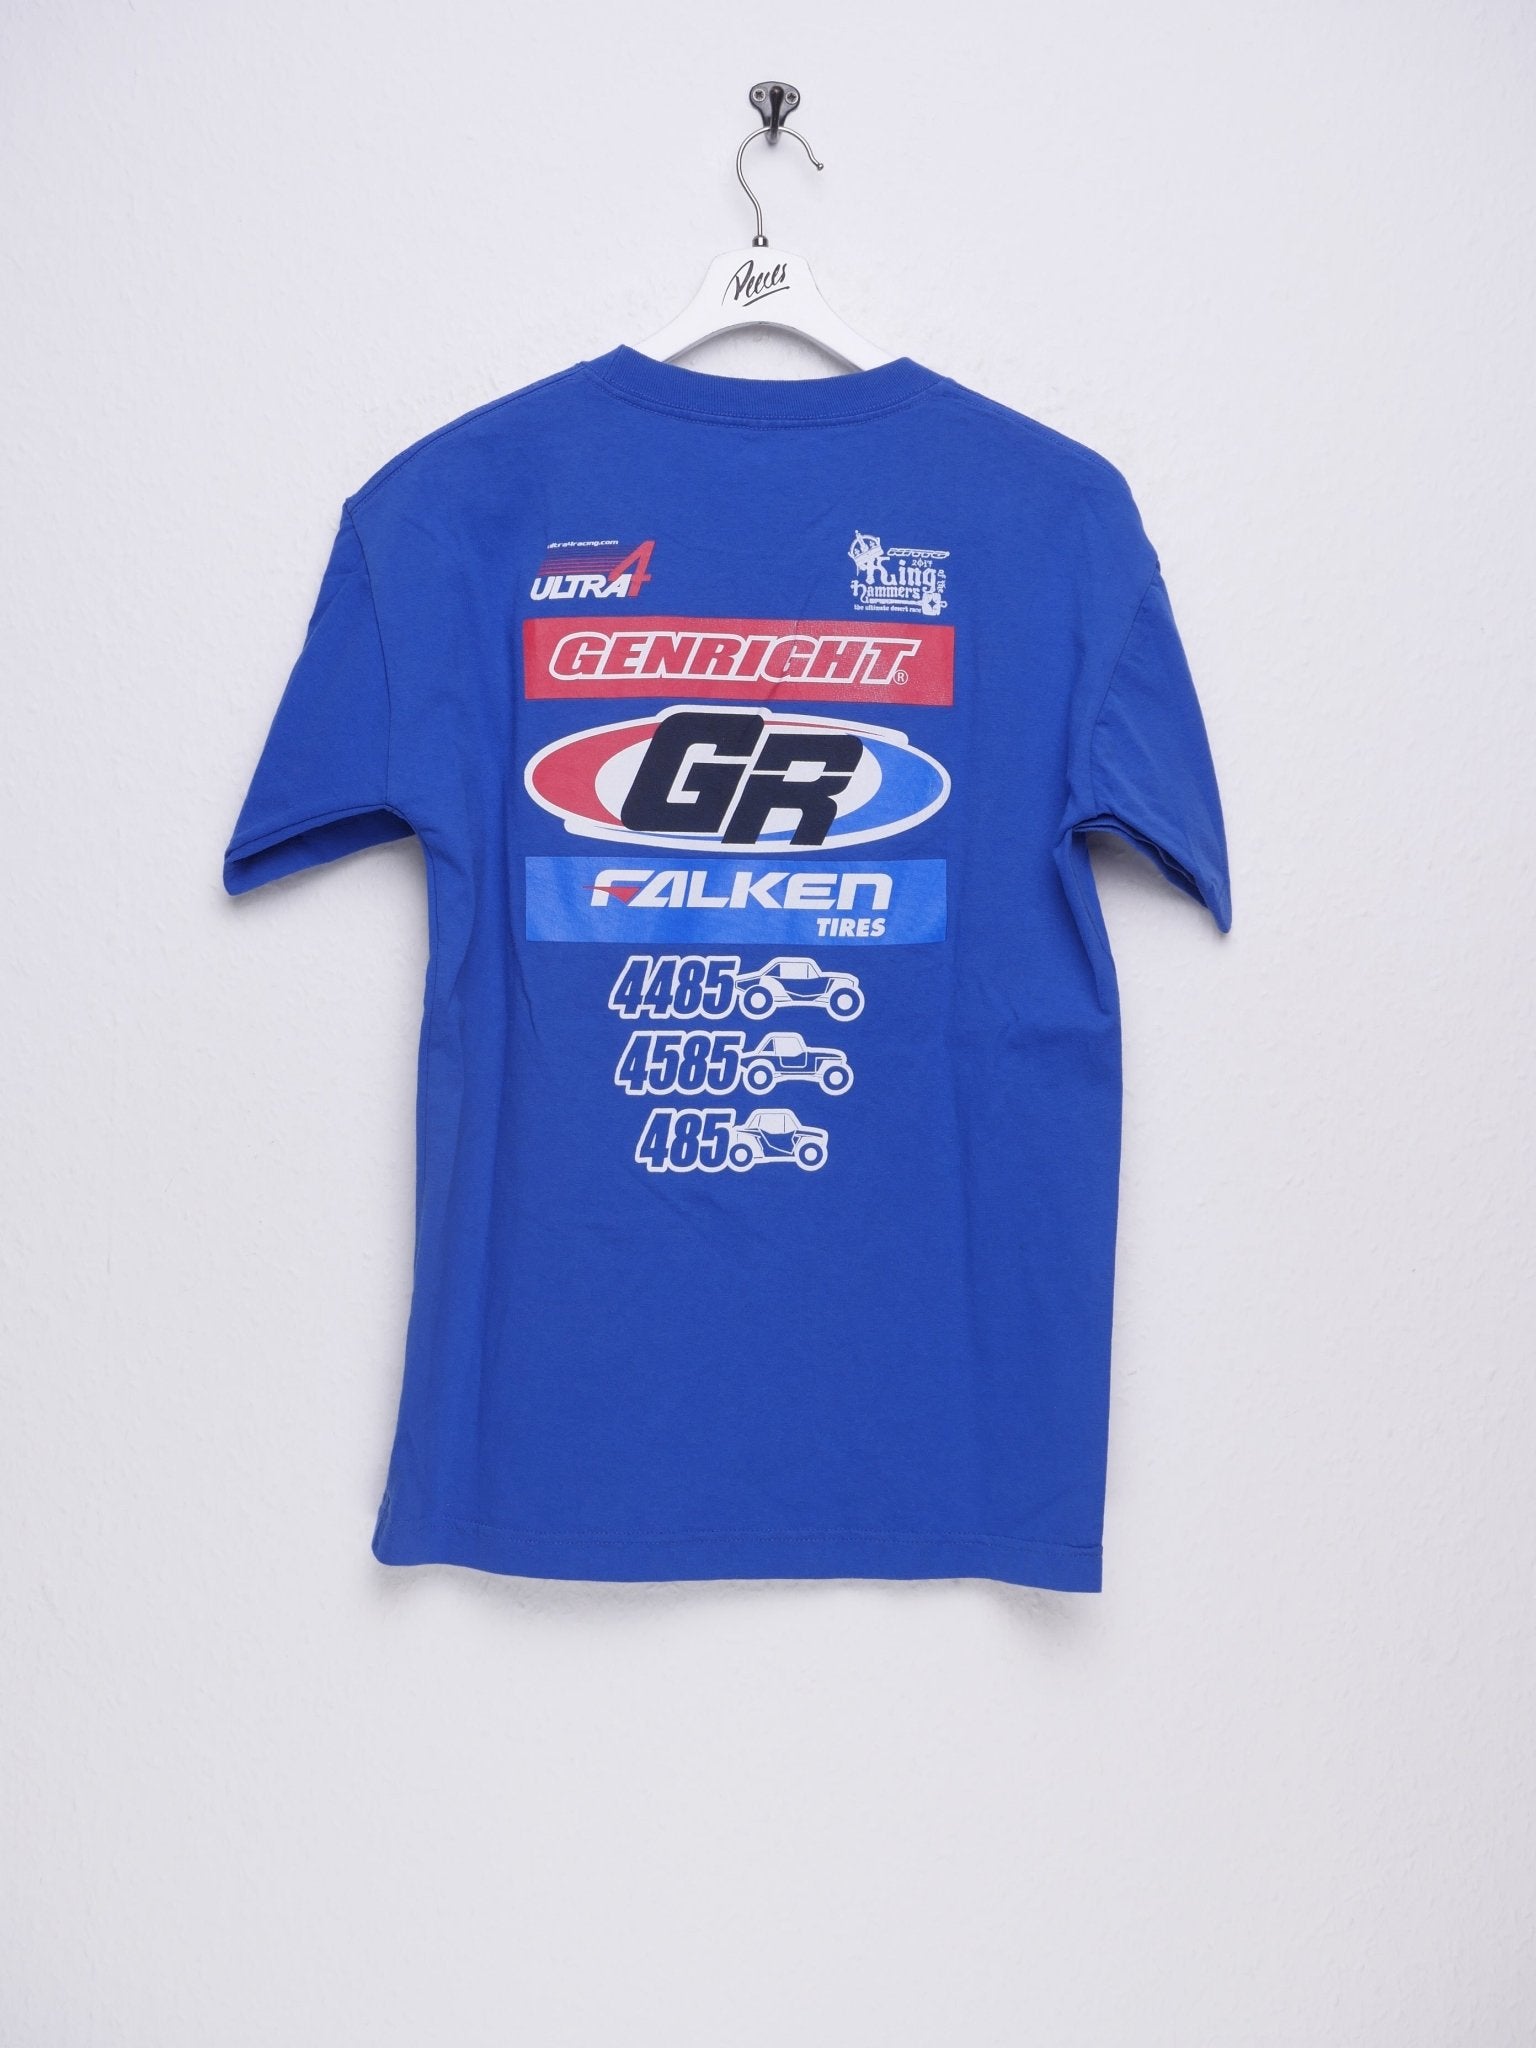 Ultra Racing printed Graphic Vintage Shirt - Peeces